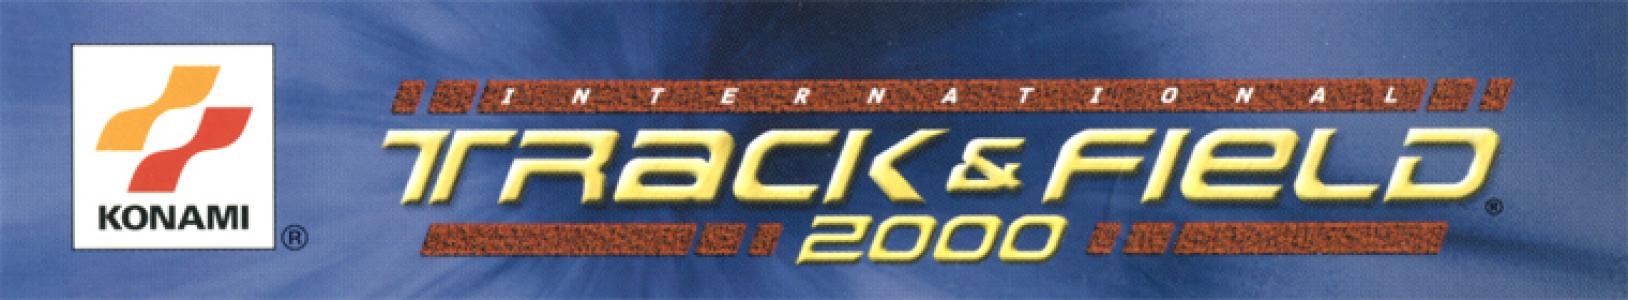 International Track & Field 2000 banner